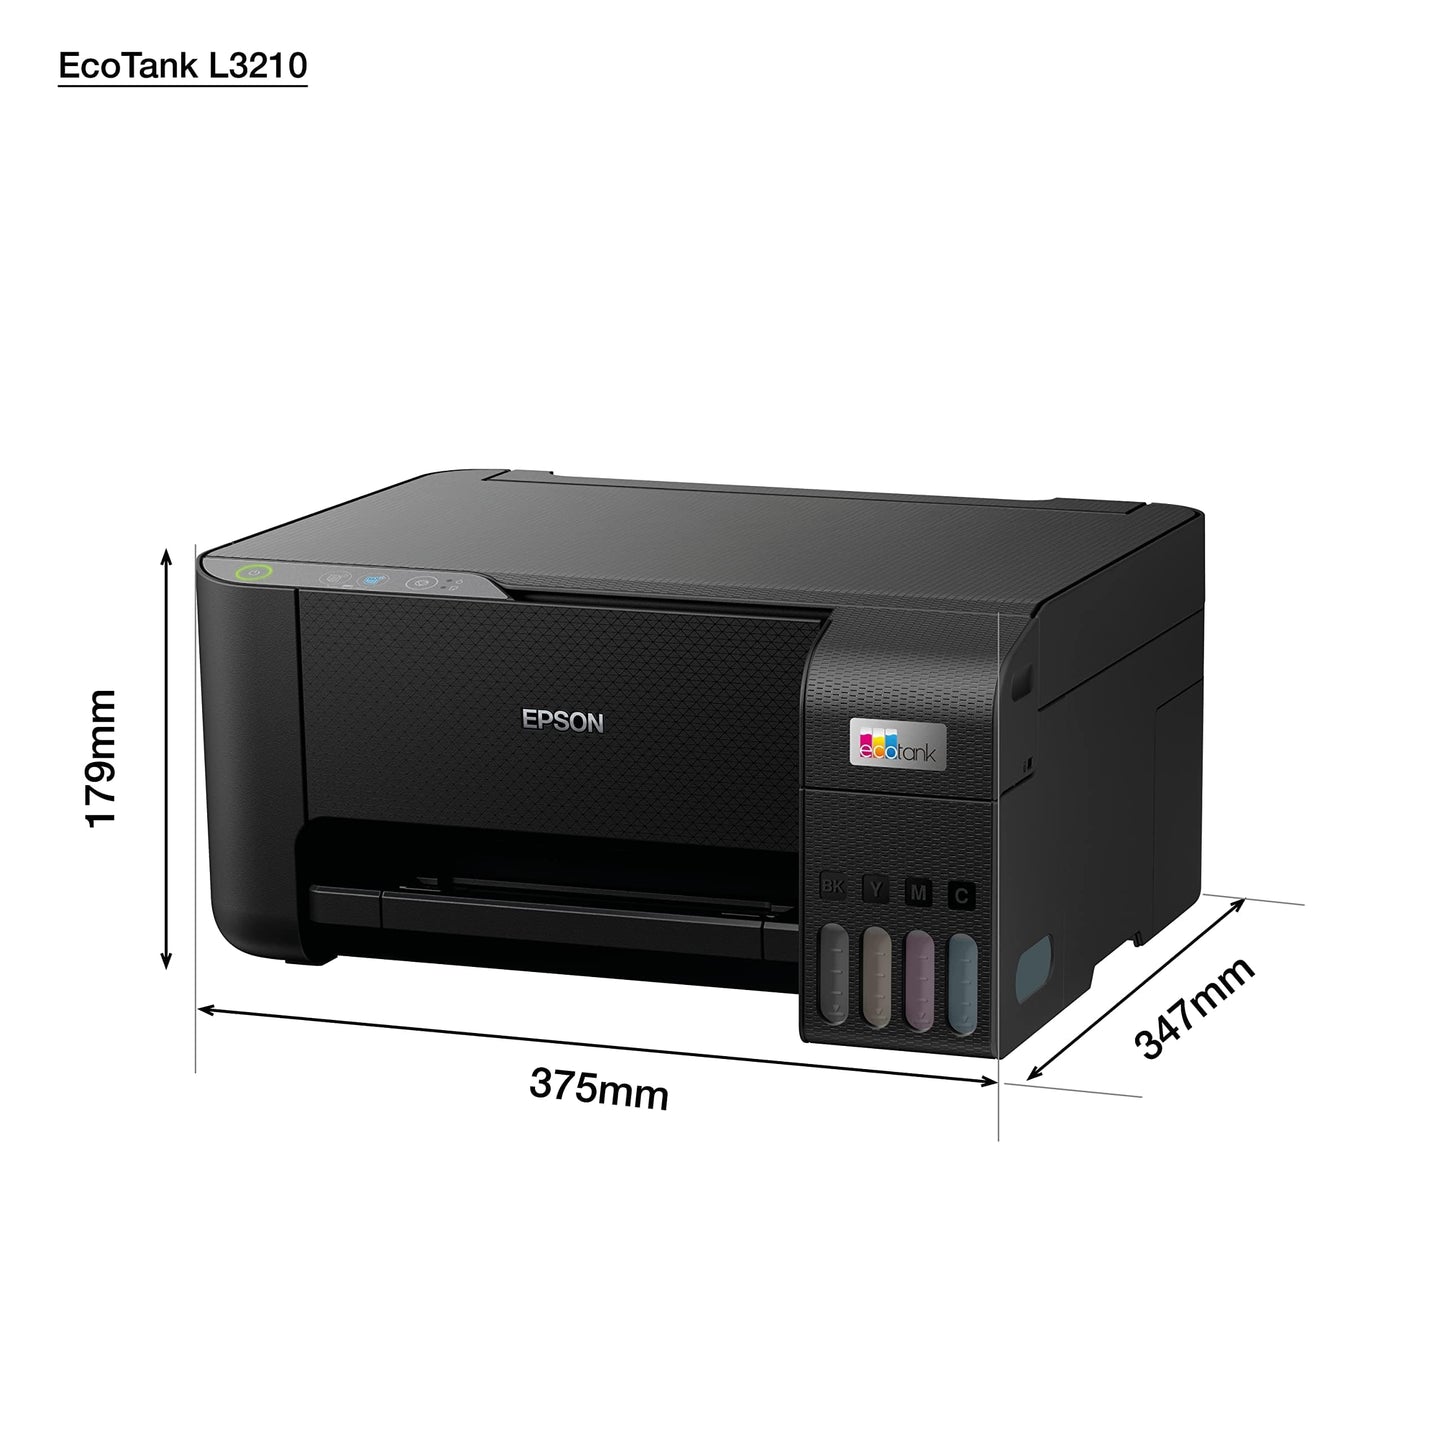 Epson Ecotank L3210 Home Ink Tank Printer A4, Colour, 3 In 1 Printer, Black, Compact - CaveHubs